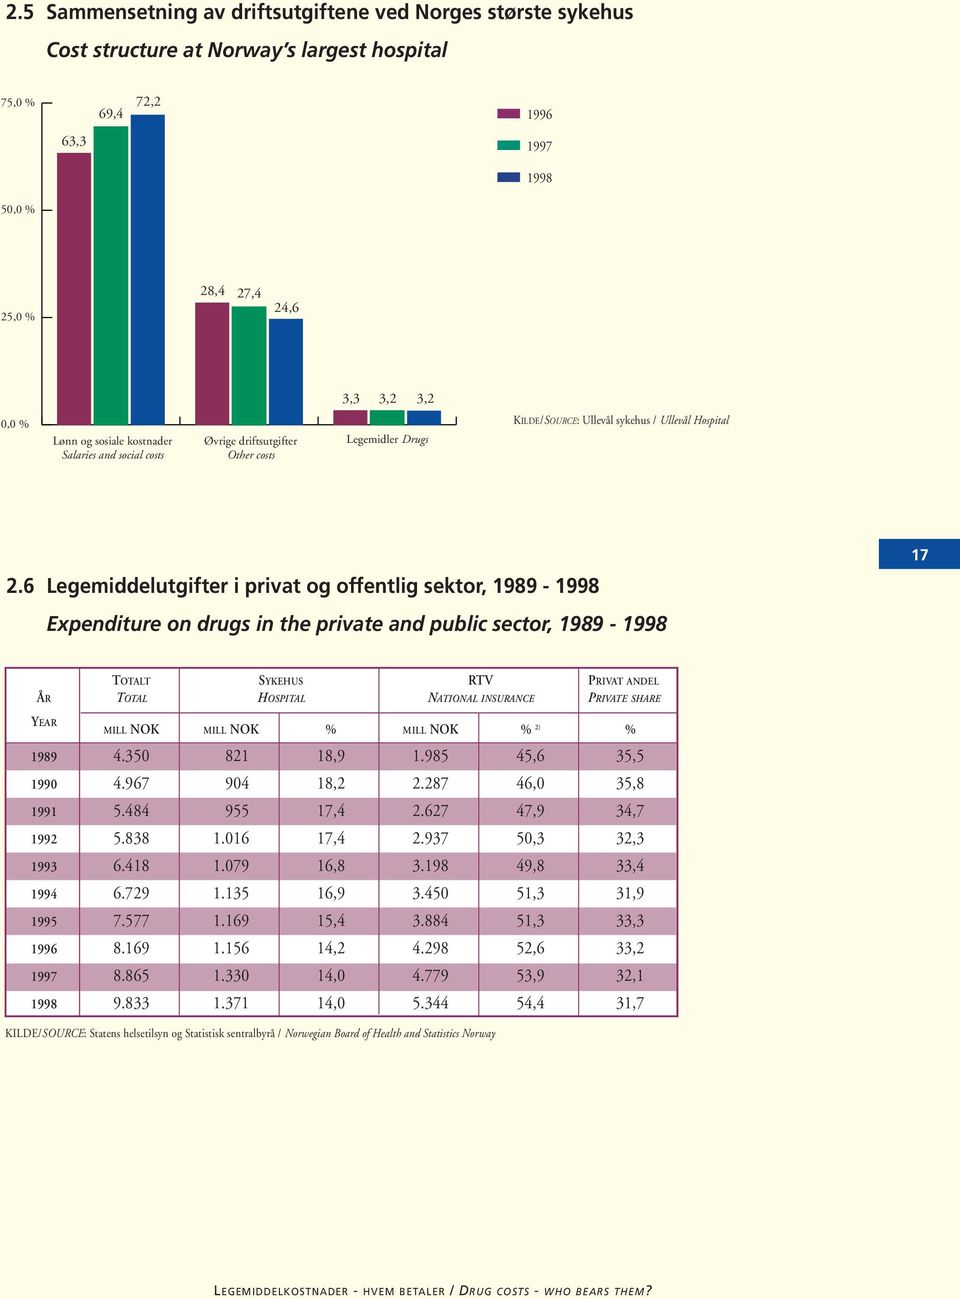 6 Legemiddelutgifter i privat og offentlig sektor, 1989-1998 Expenditure on drugs in the private and public sector, 1989-1998 17 TOTALT SYKEHUS RTV PRIVAT ANDEL ÅR TOTAL HOSPITAL NATIONAL INSURANCE